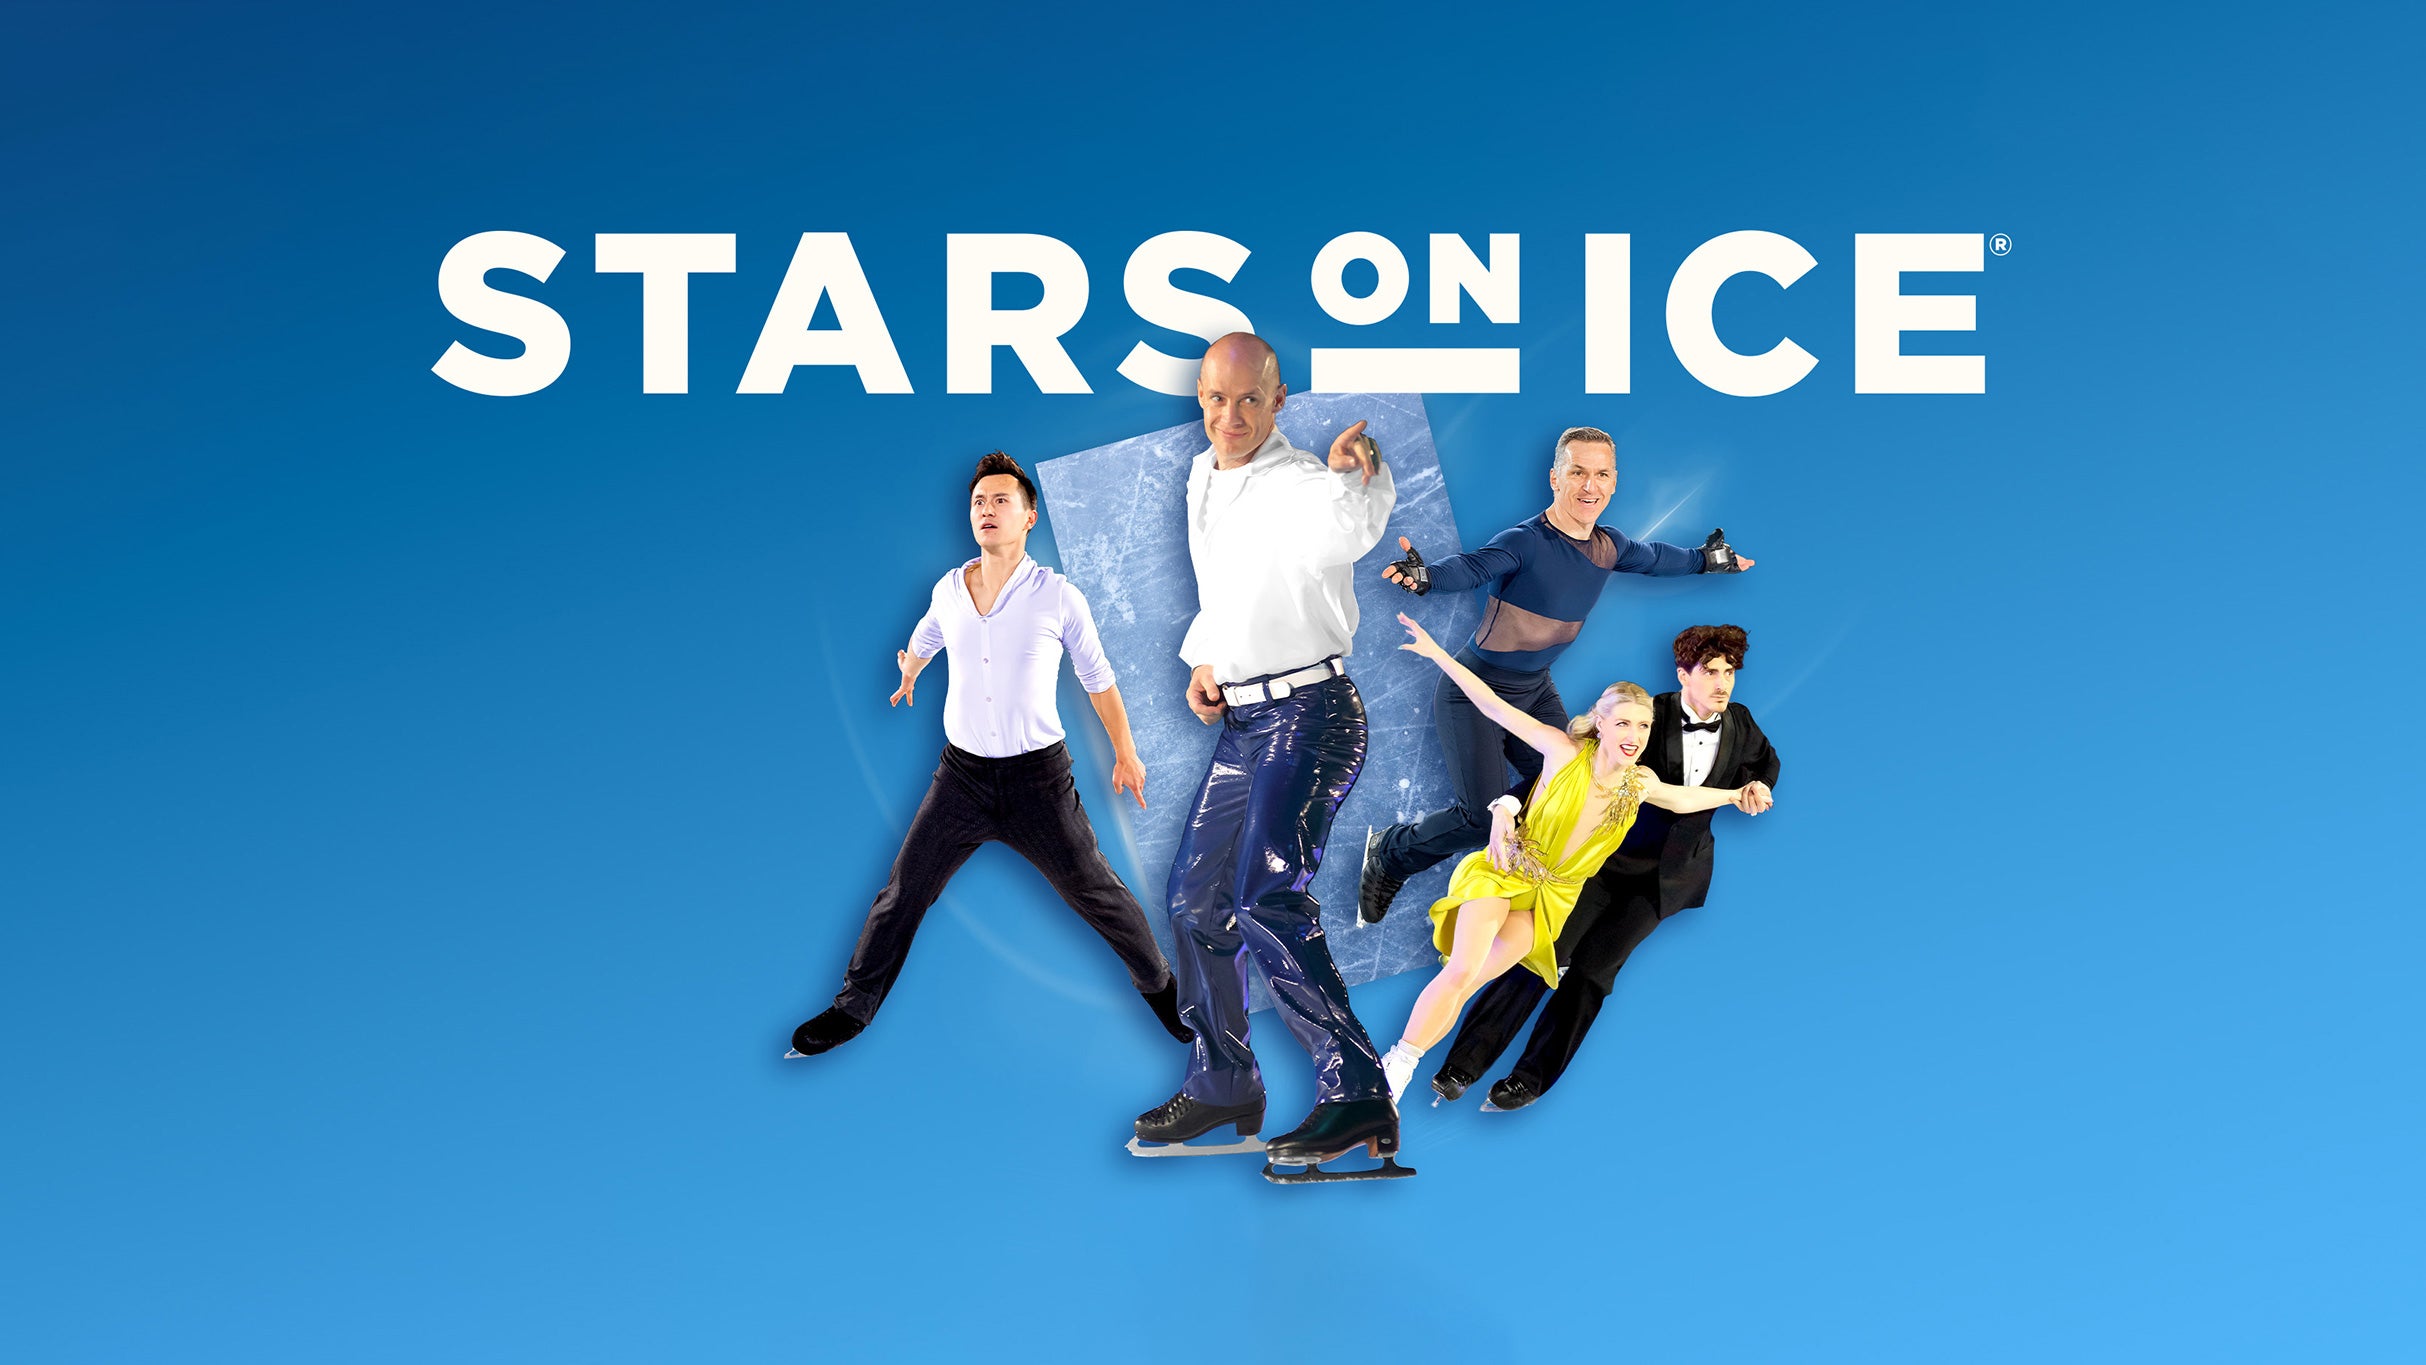 Stars on Ice - Canada in Saskatoon promo photo for Sponsor Discount presale offer code